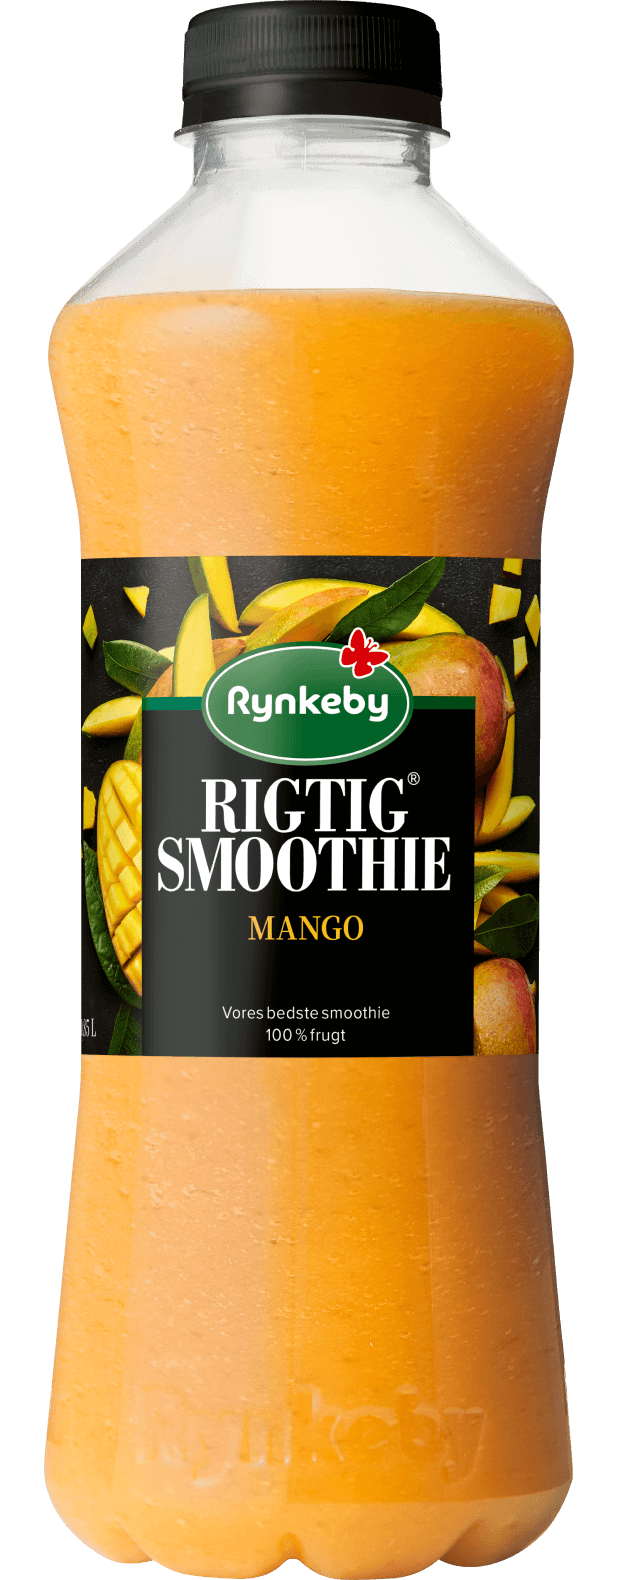 Rigtig® Mango Smoothie